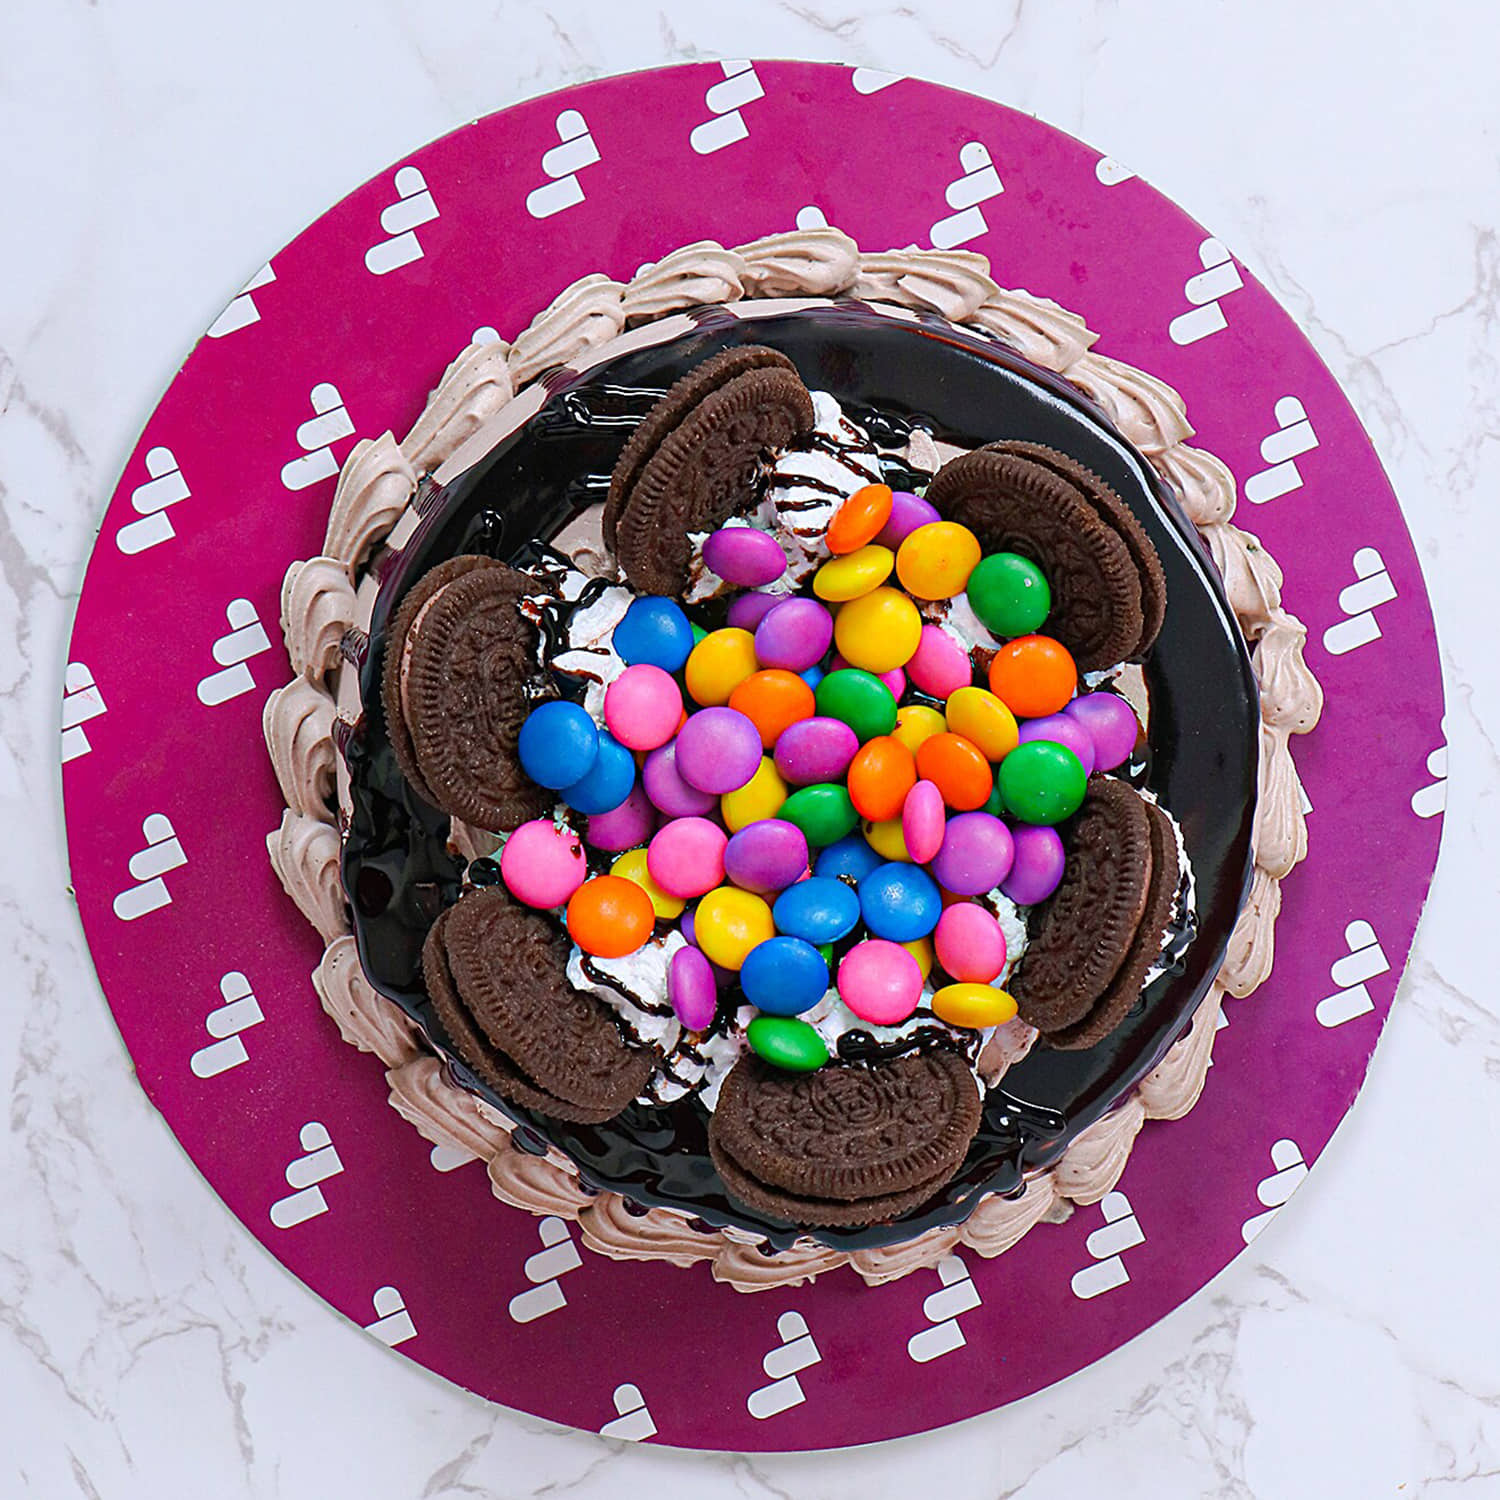 Tempting Chocolate Kitkat Gems Cake | Yummy cake